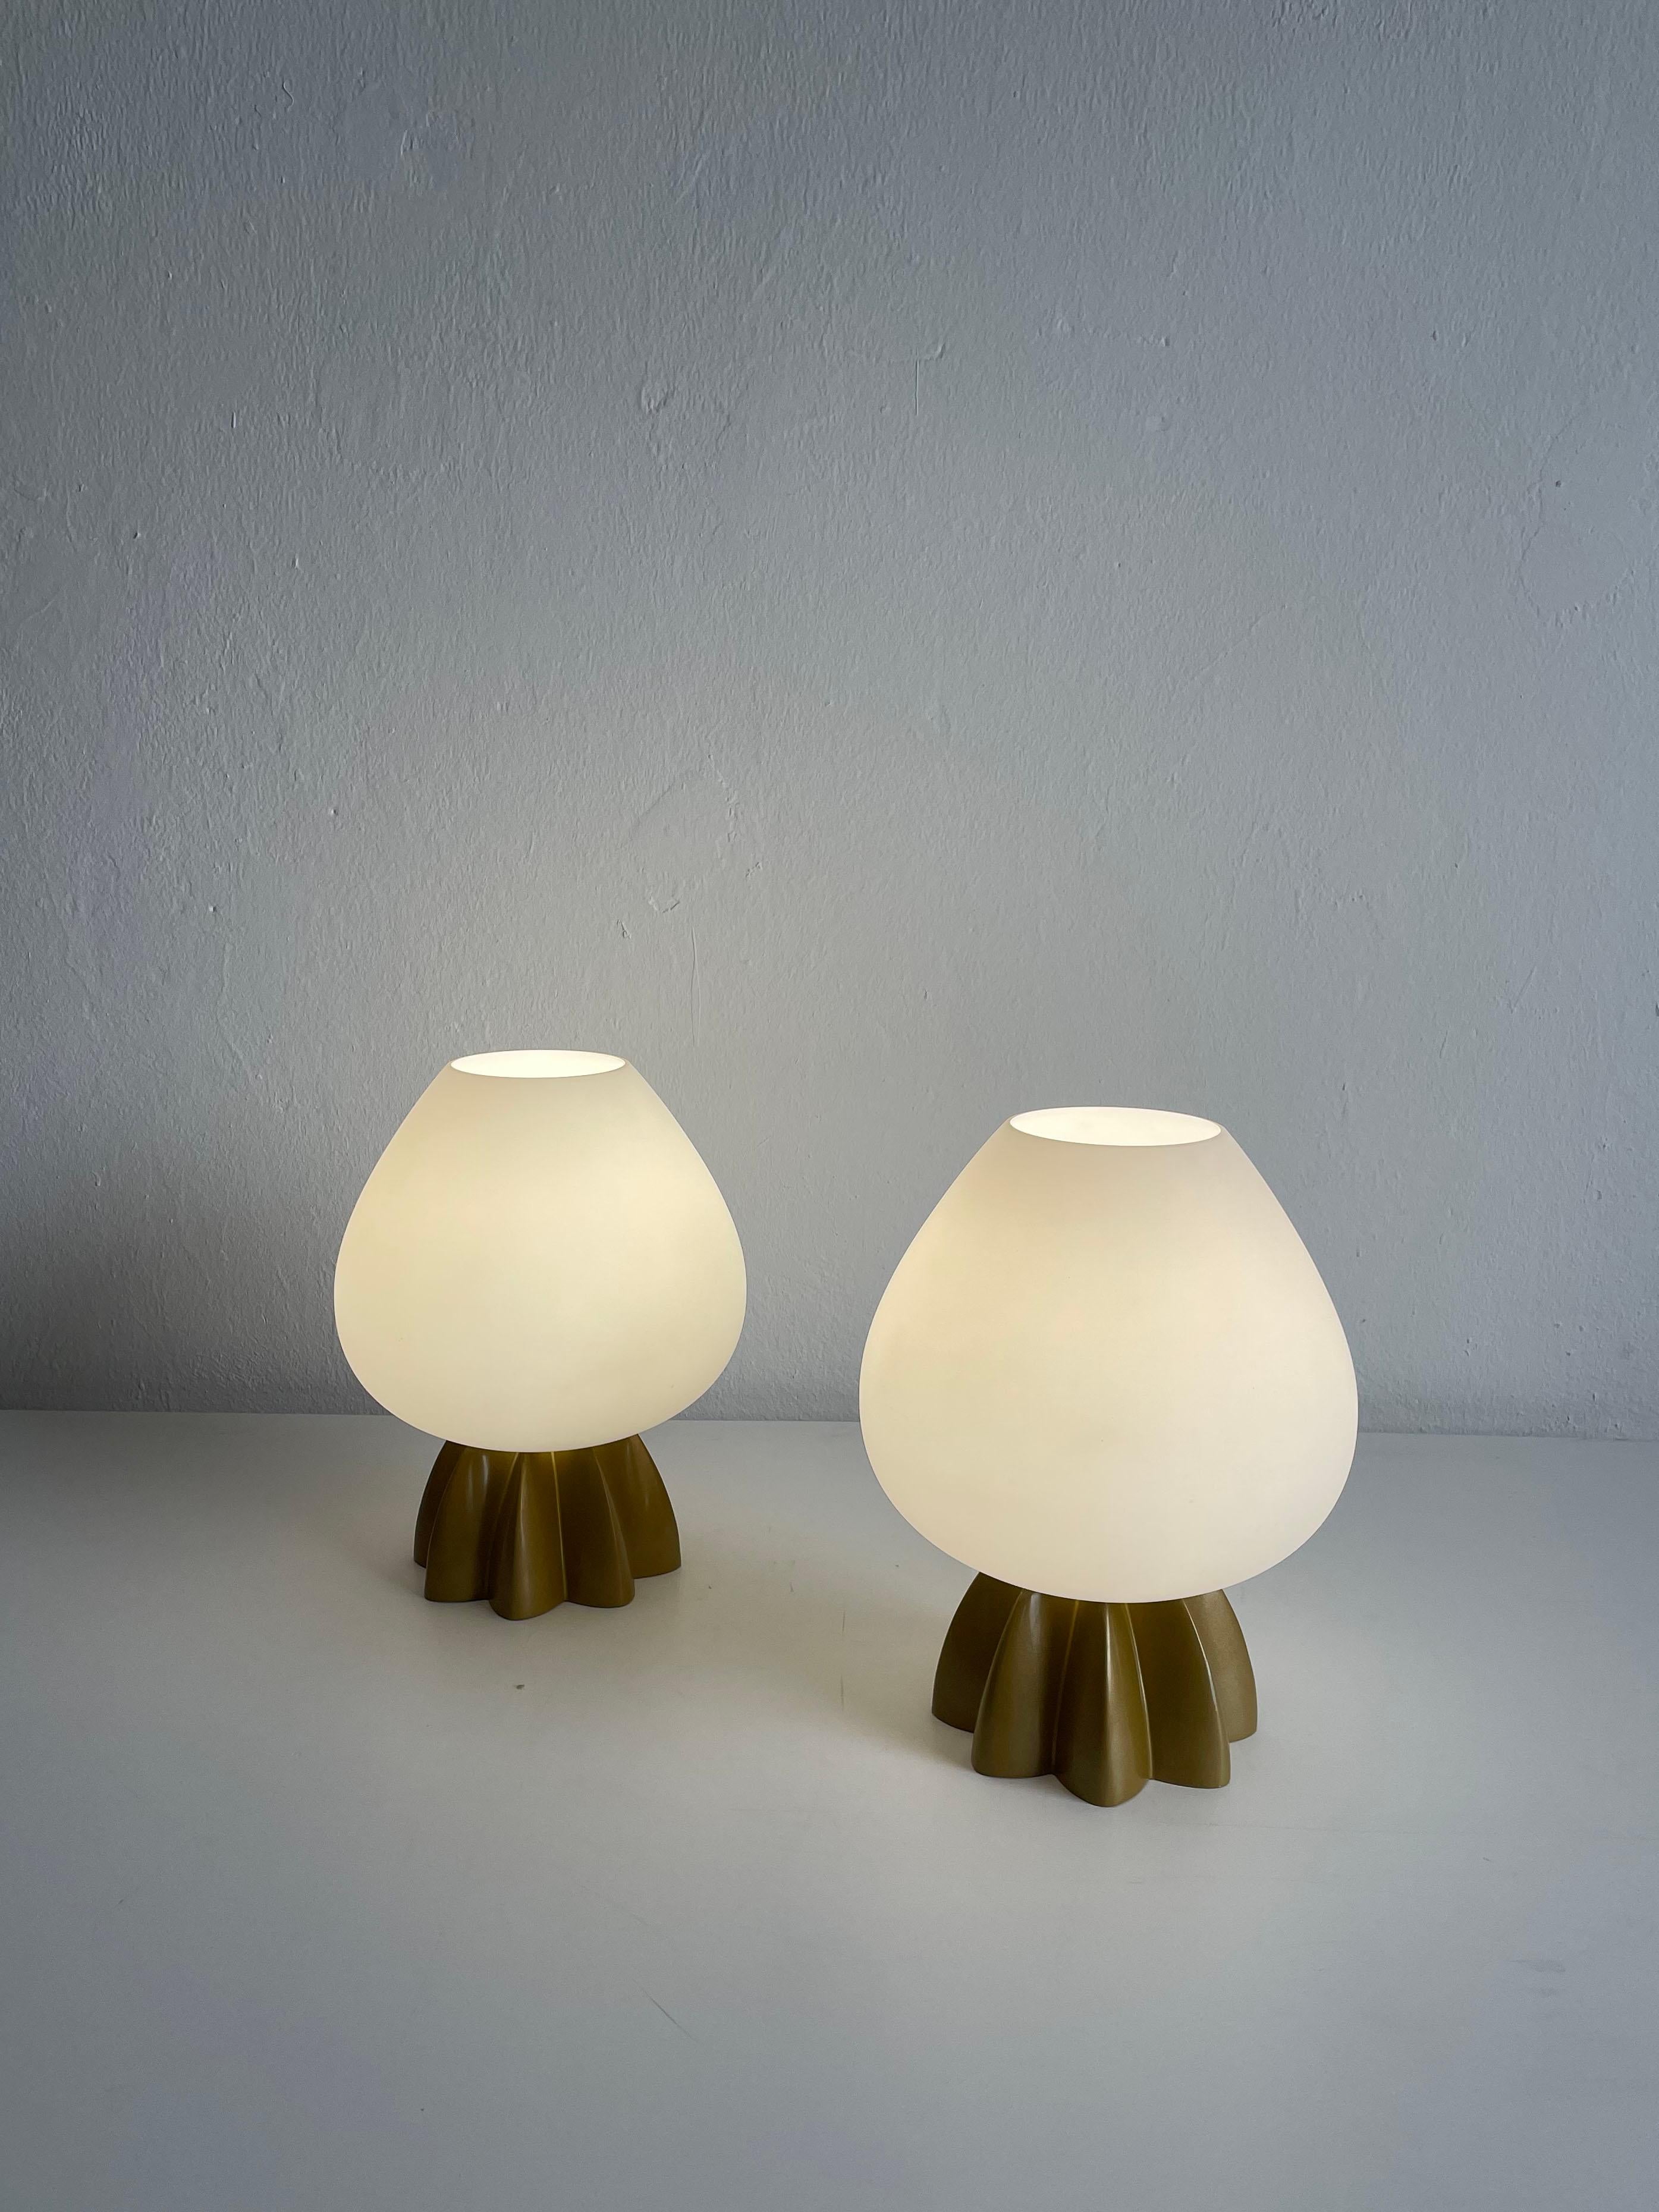 Set of 2 Foscarini Table Lamps, Model Fruits by Rodolfo Dordoni, Italy, 1980s For Sale 3